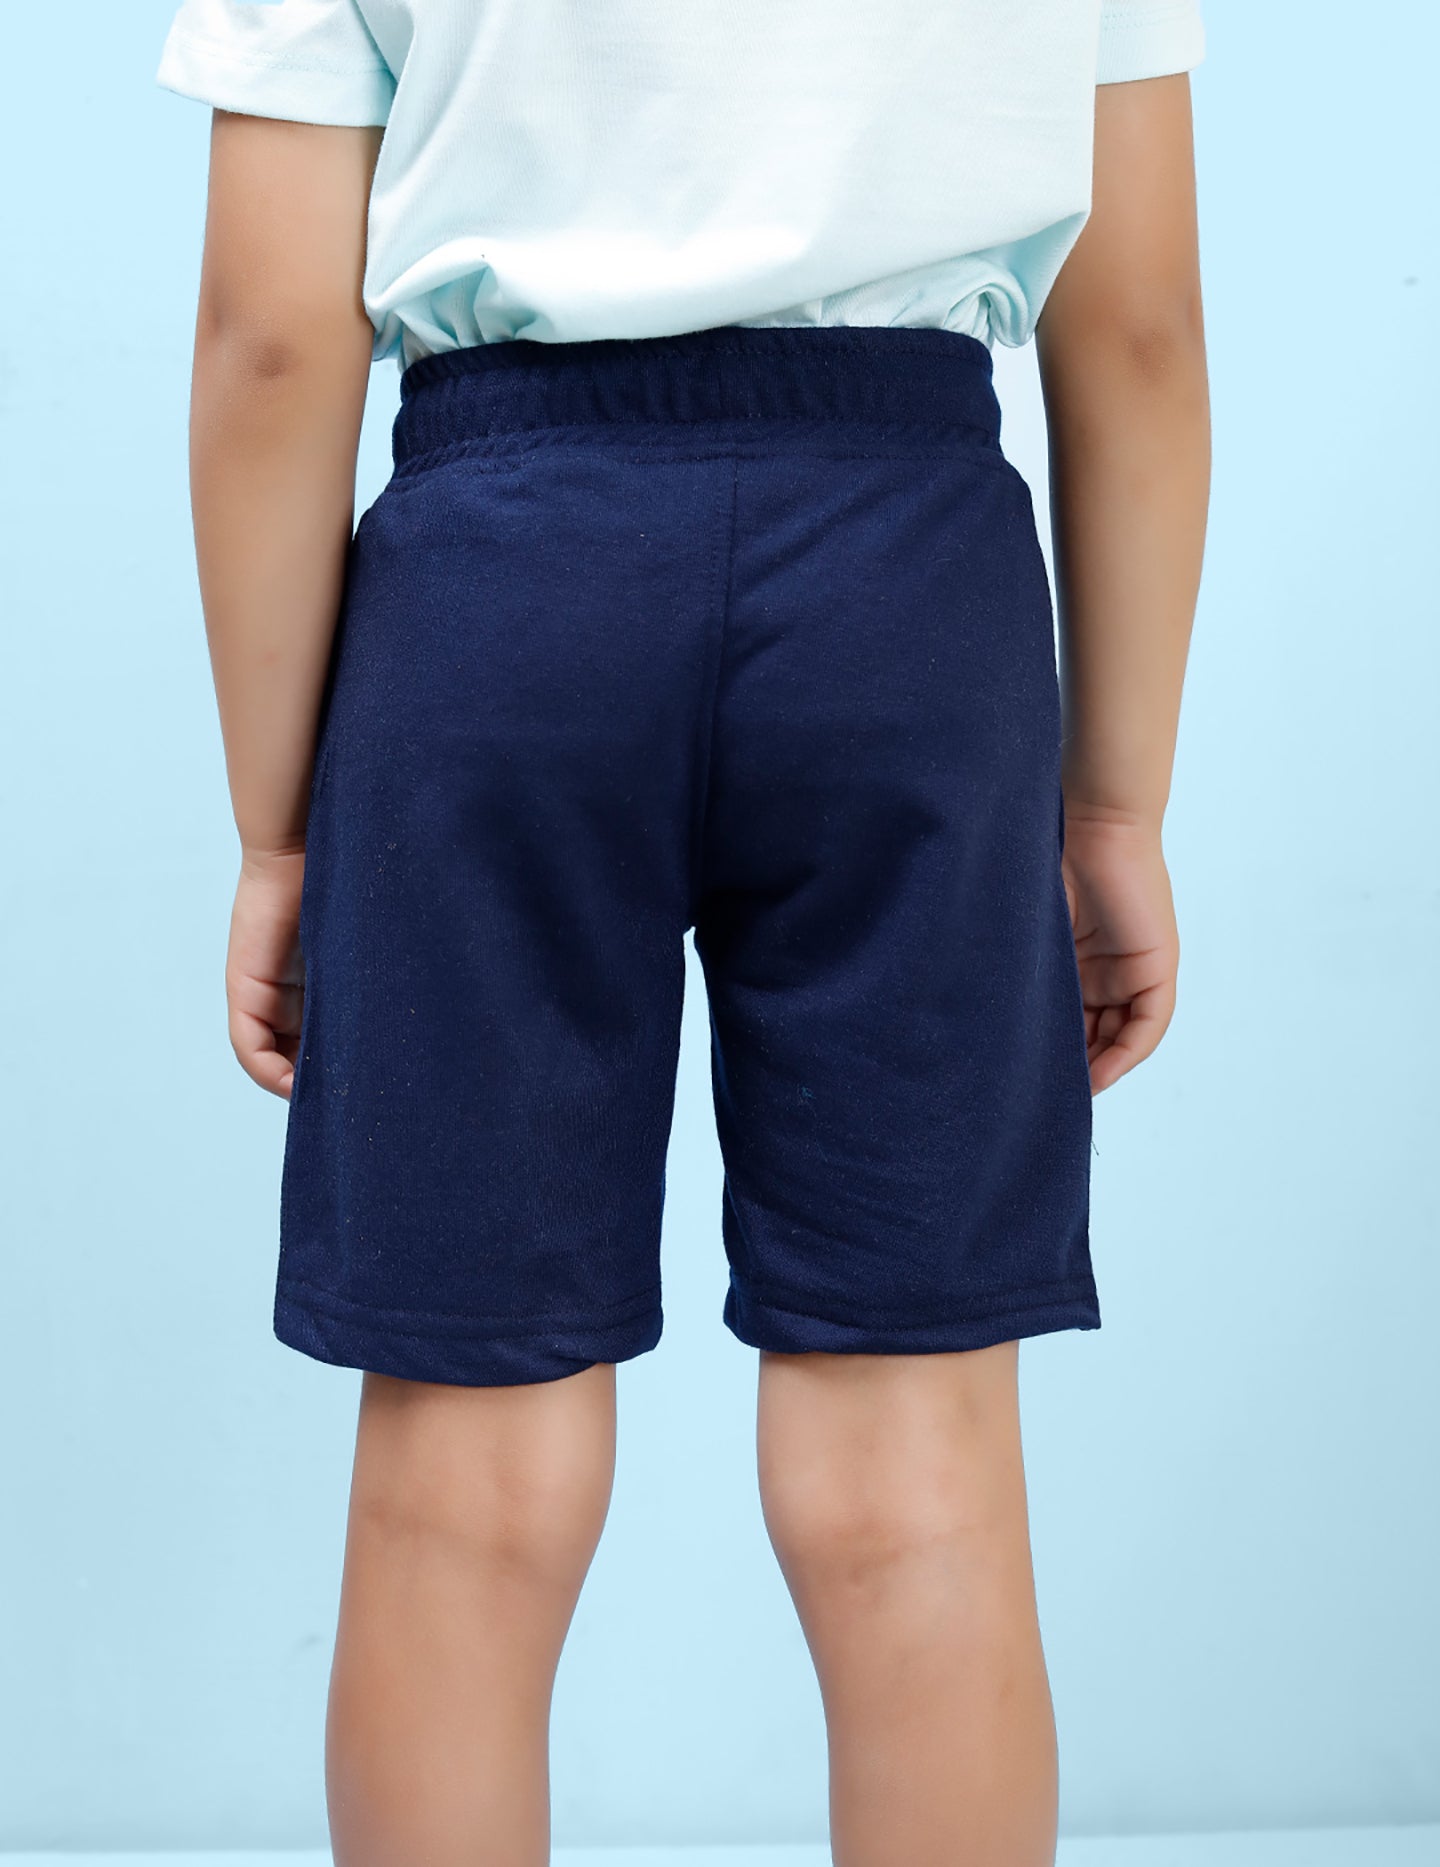 Nusyl 1994 Printed Navy Blue Boys Shorts